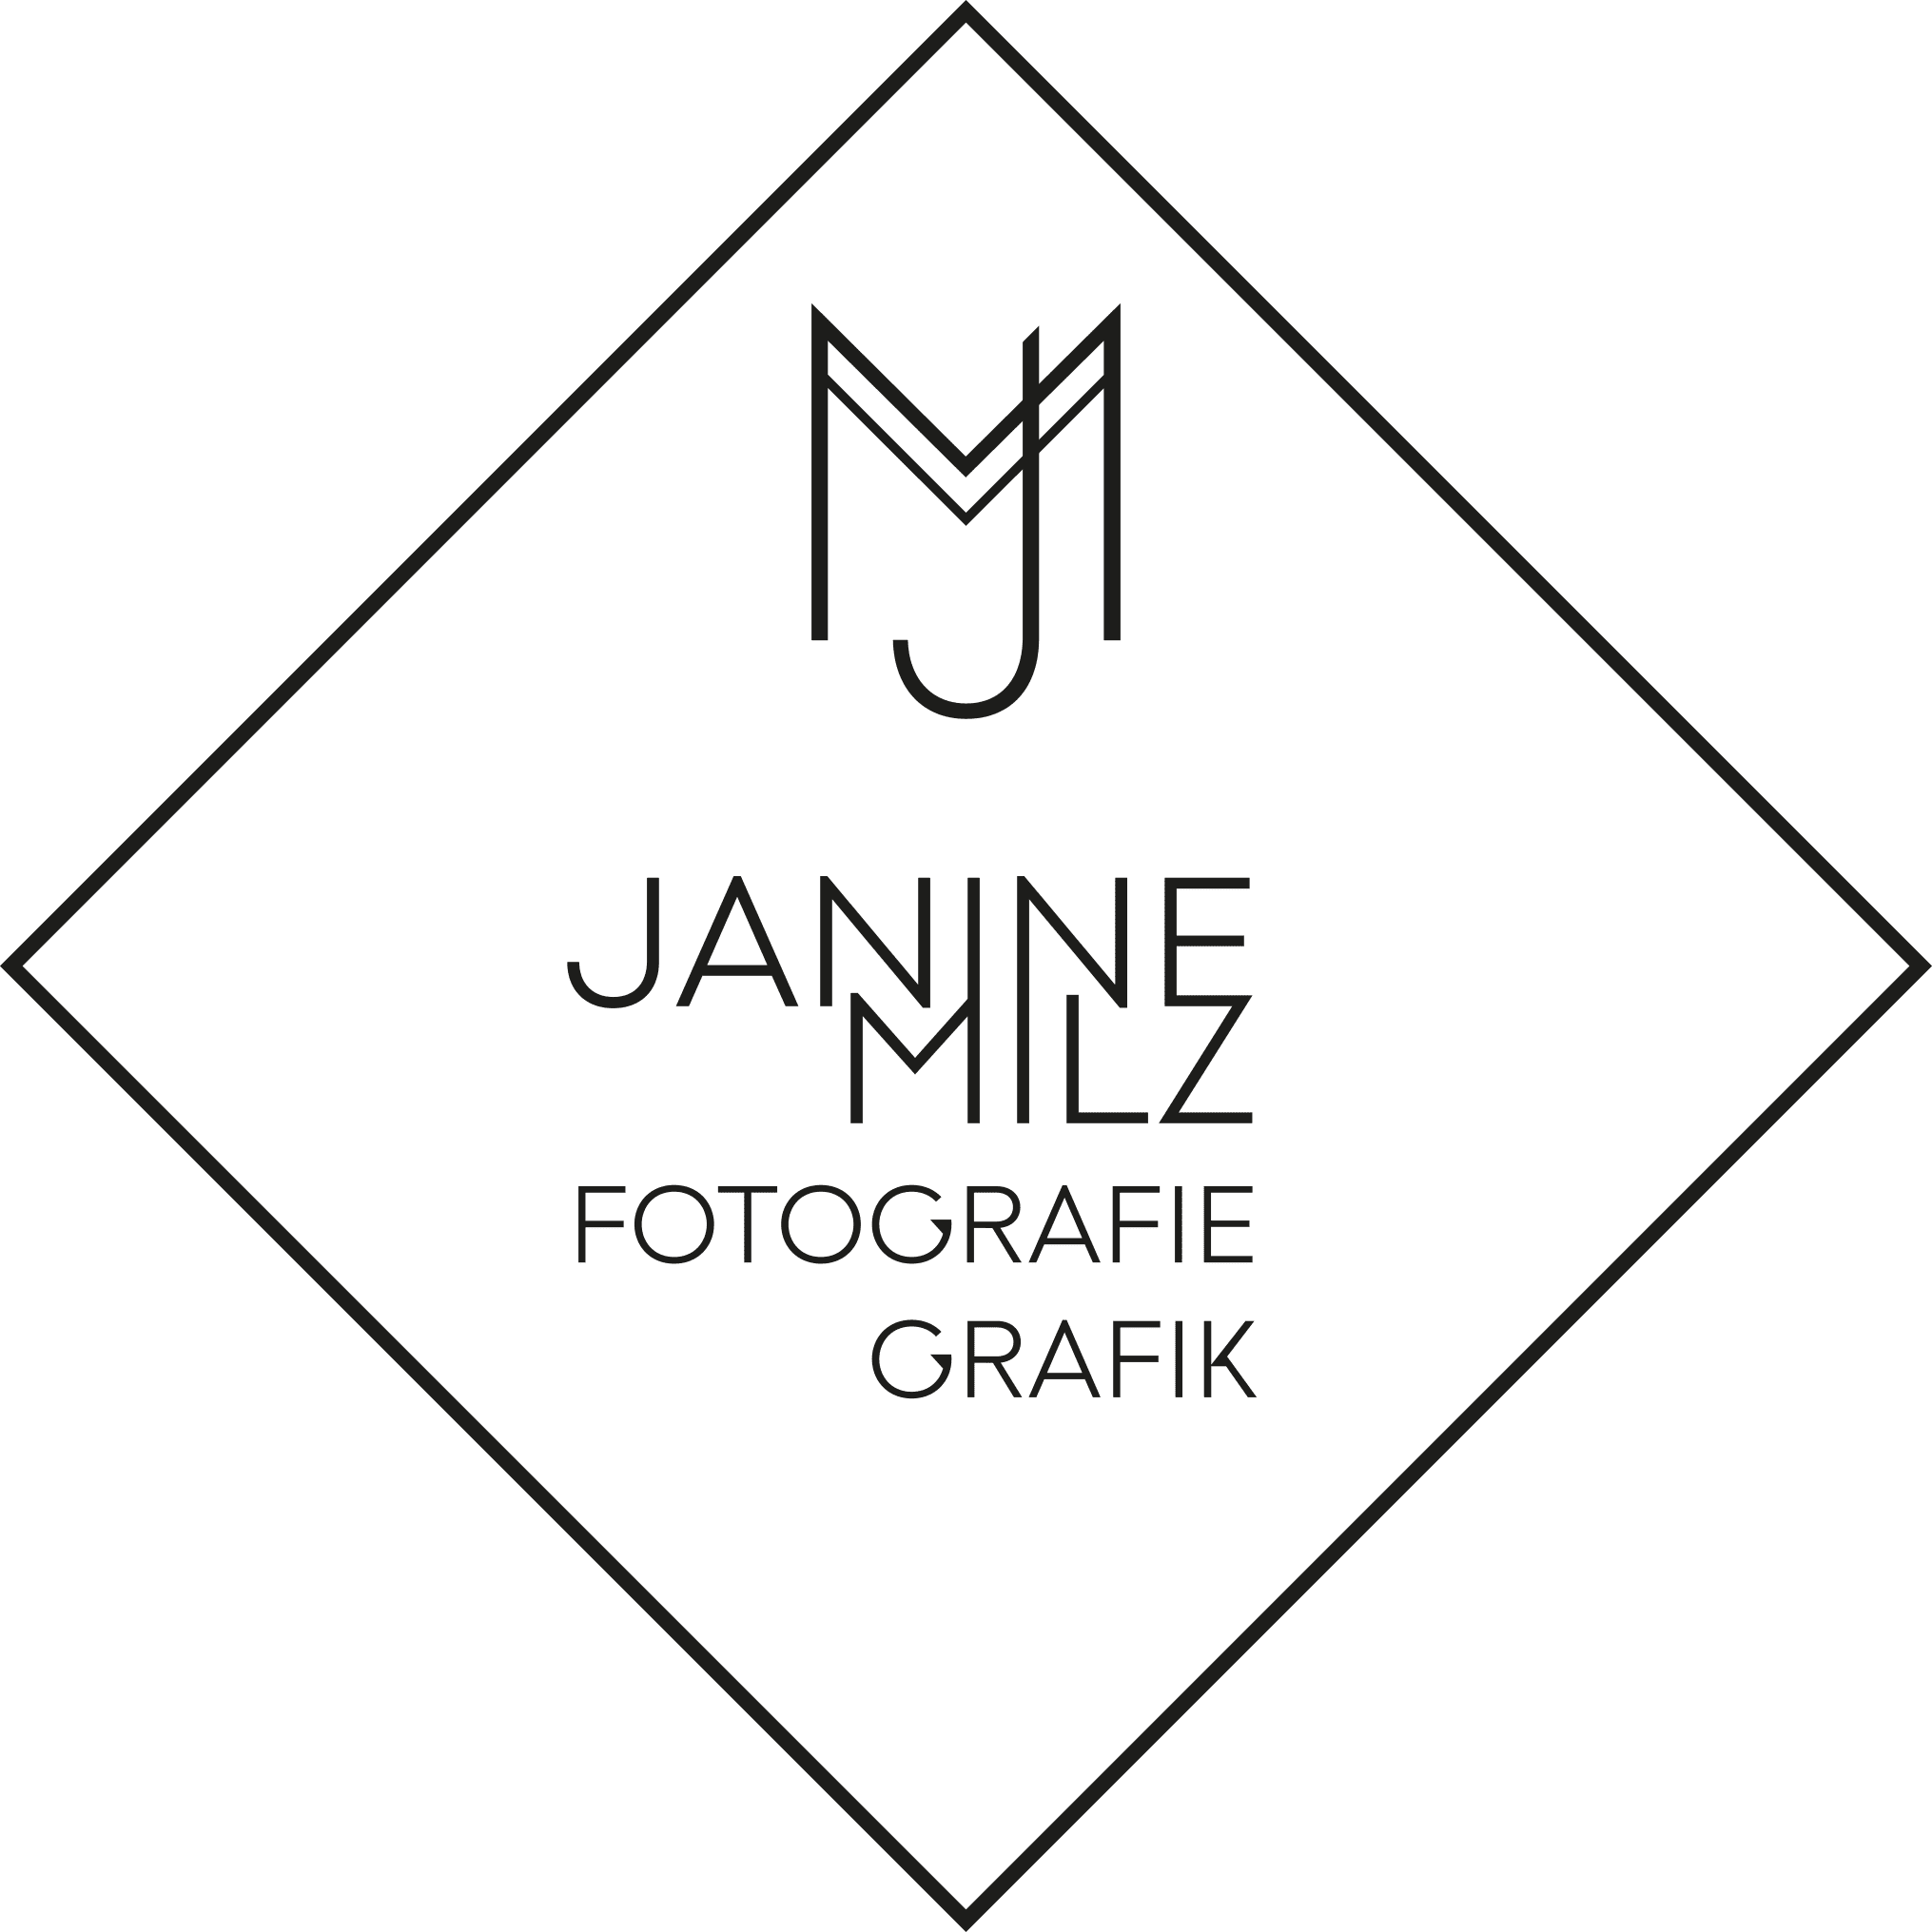 Janine Milz – Fotografie Grafik